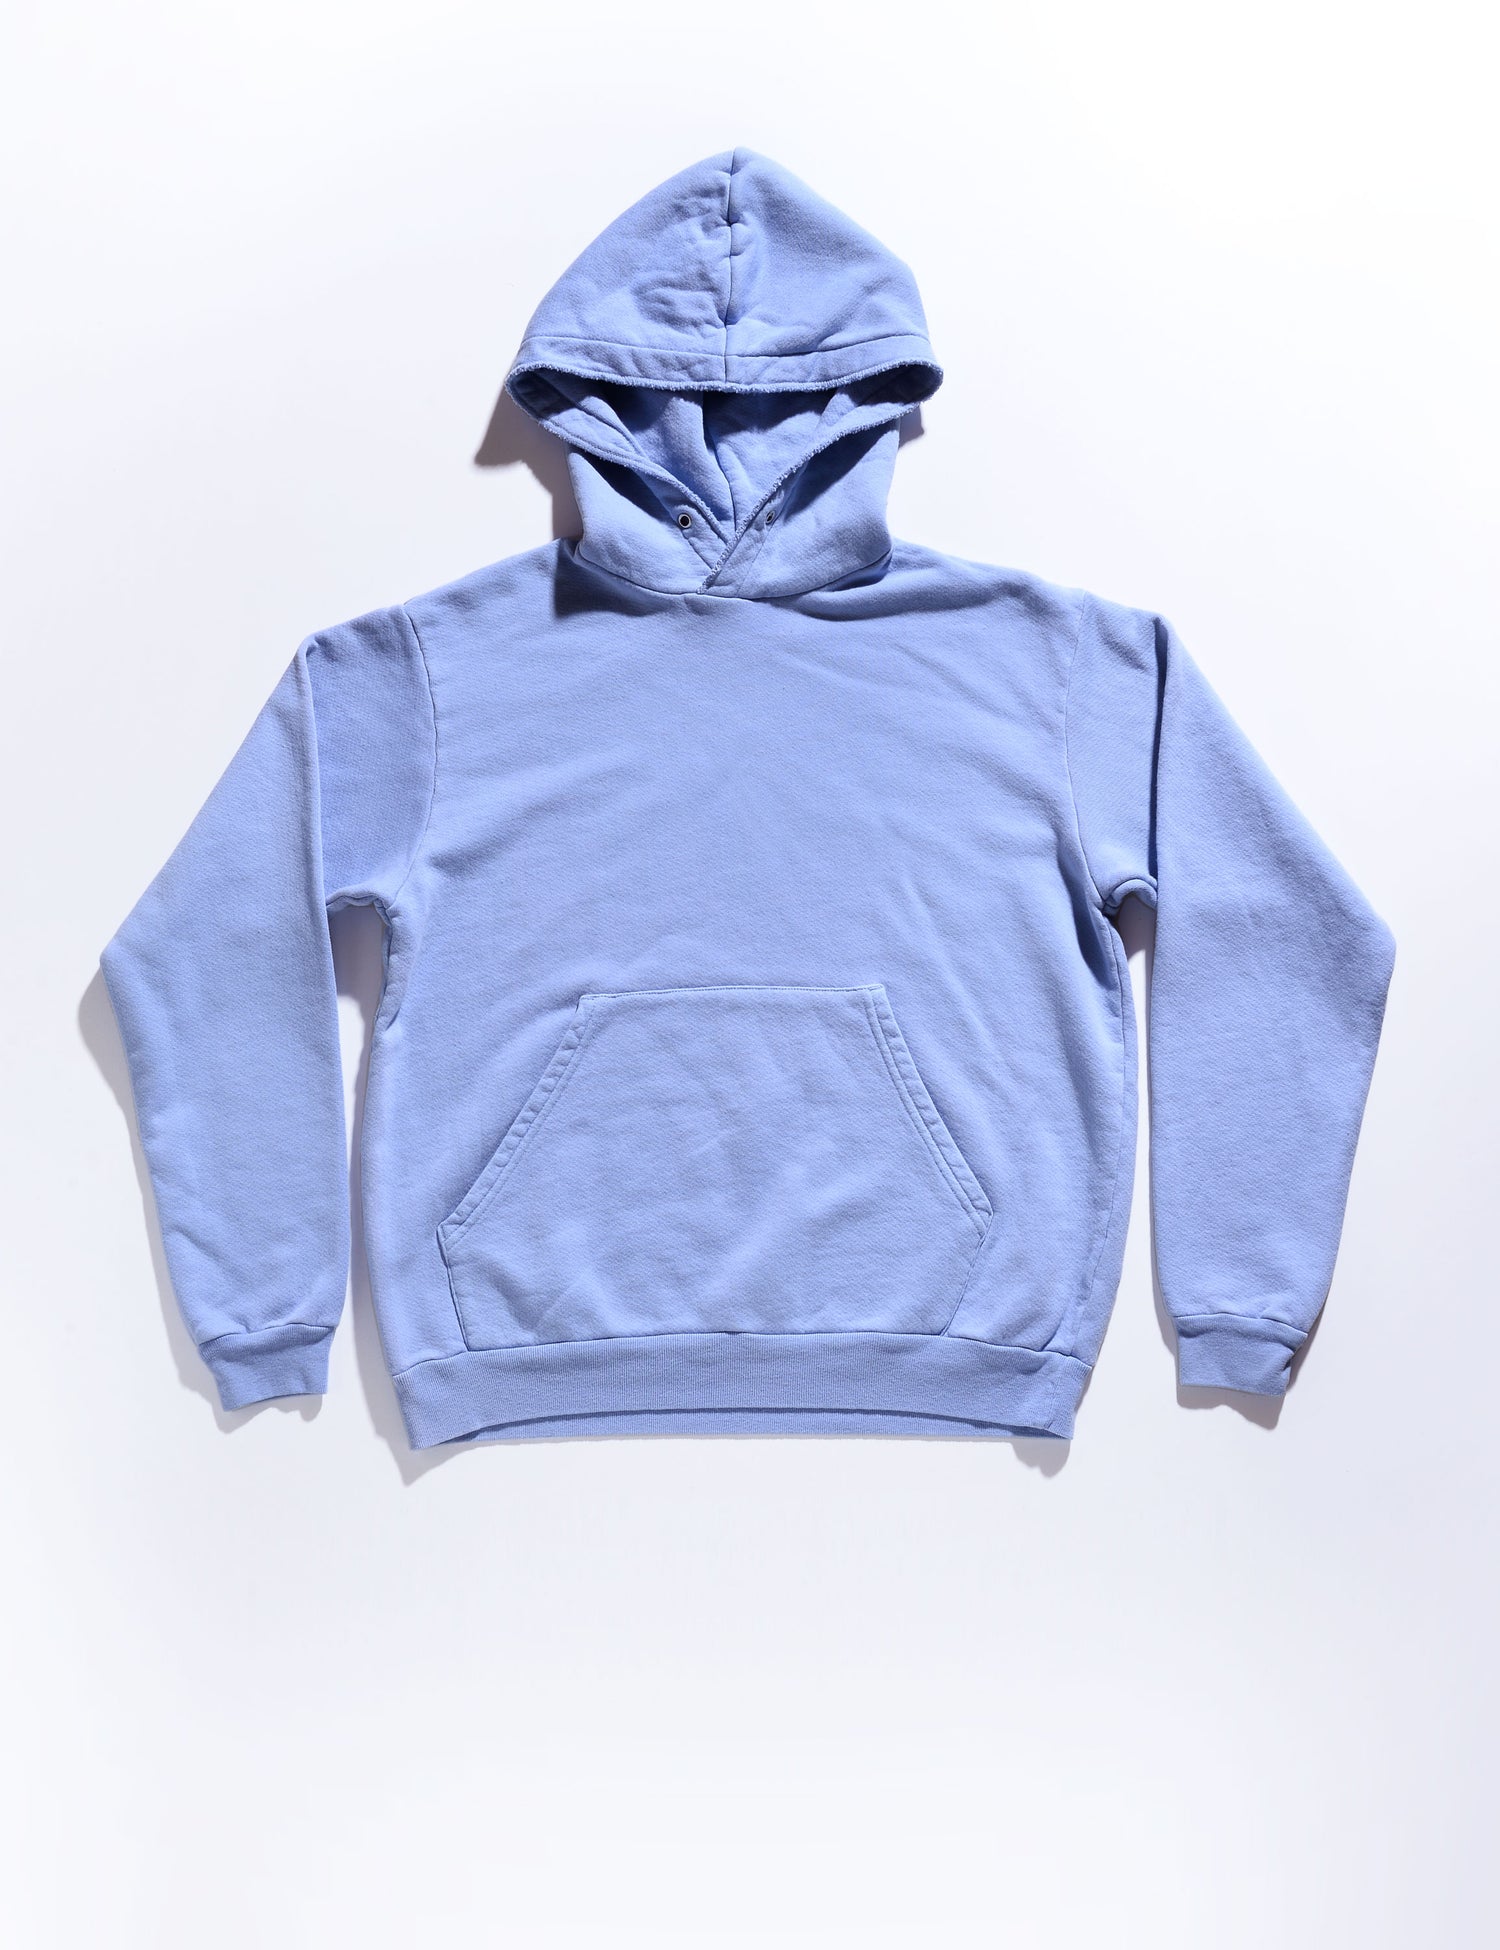 Full length flat shot of Velva Sheen New Hoodie Sweatshirt in Foggy Blue